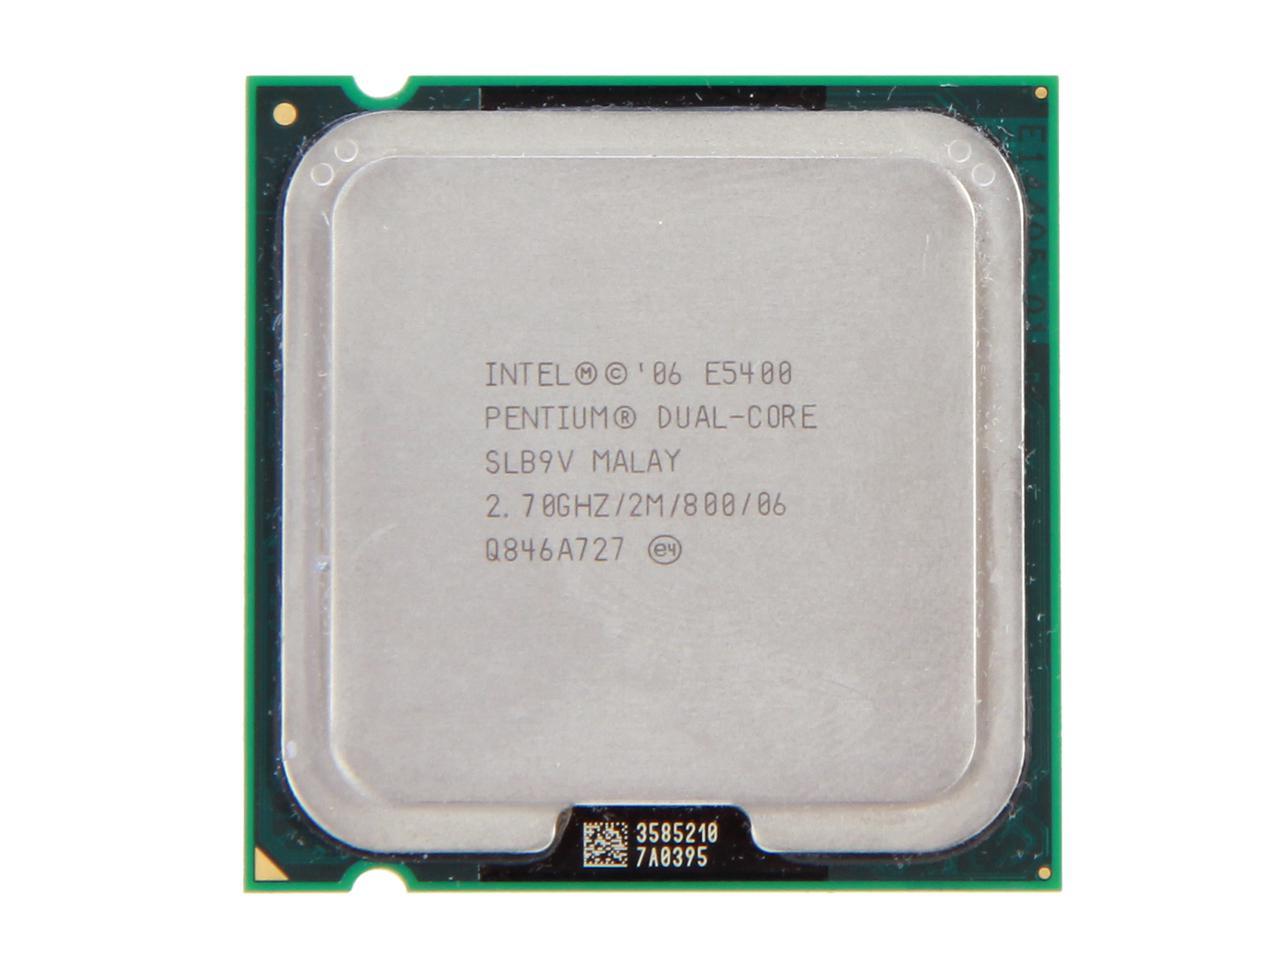 Onderbreking Soeverein Democratie Refurbished: Intel Pentium Dual-Core E5400 - Pentium Wolfdale Dual-Core 2.7  GHz LGA 775 65W Desktop Processor - SLB9V - Newegg.com